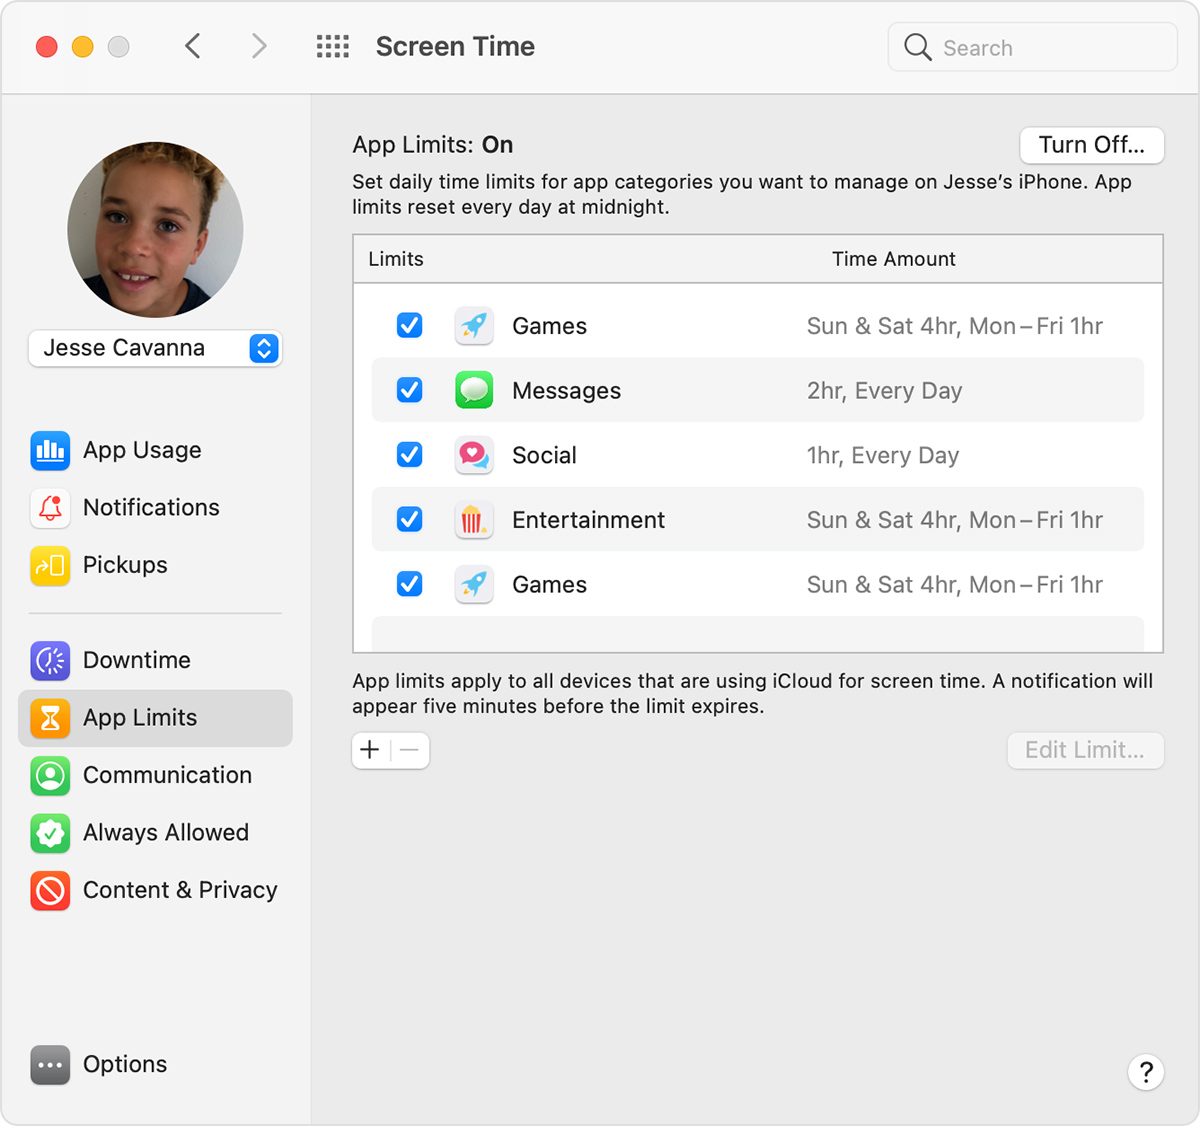 Screen Time preferences: App Limits